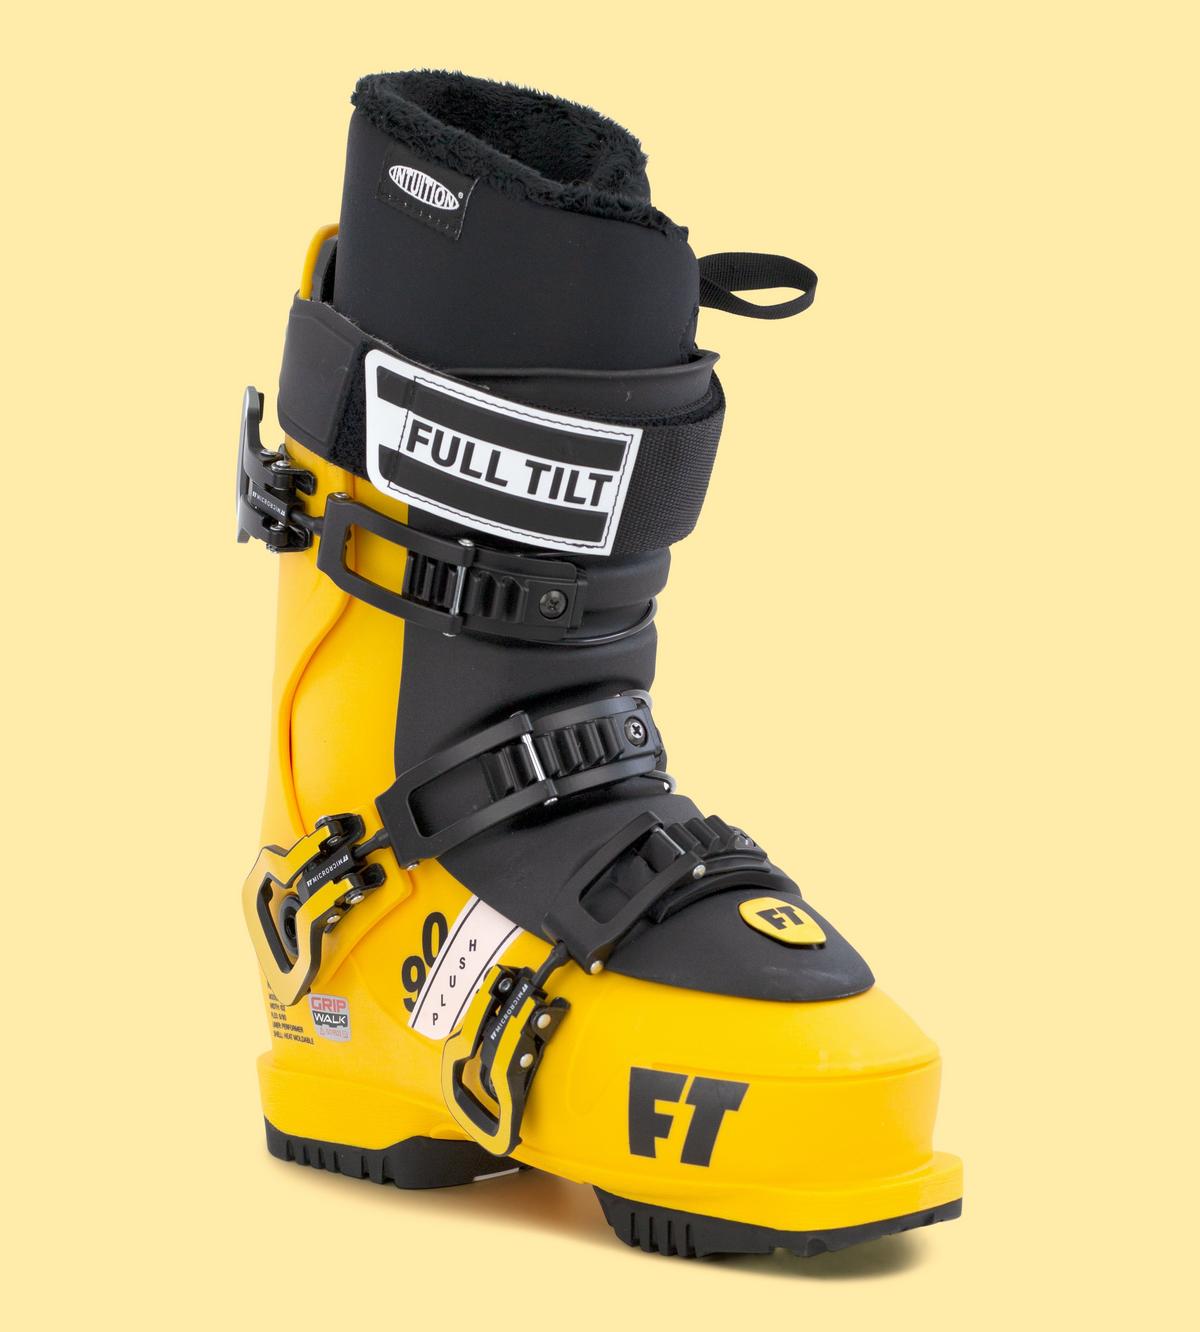 Details about   Full Tilt Plush 6 Used Women's Ski Boots Size 25.5 #819557 